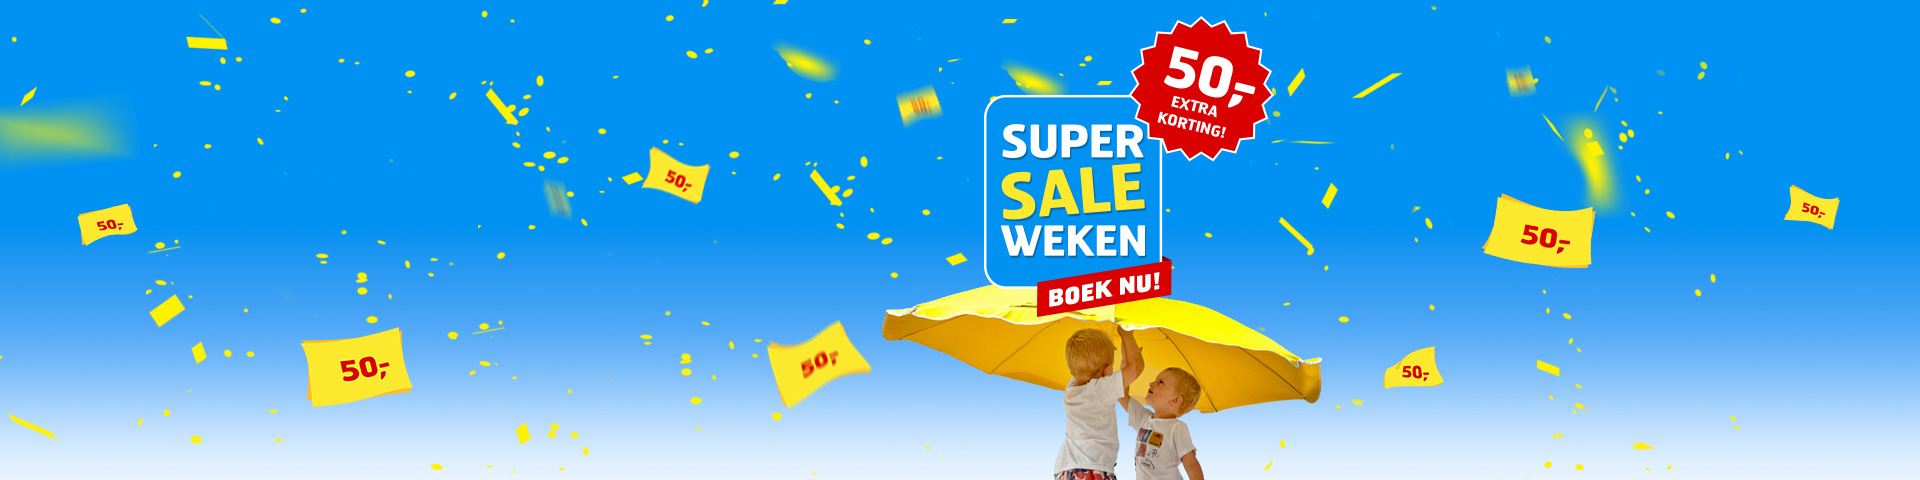 Super Sale Weken 50 euro korting